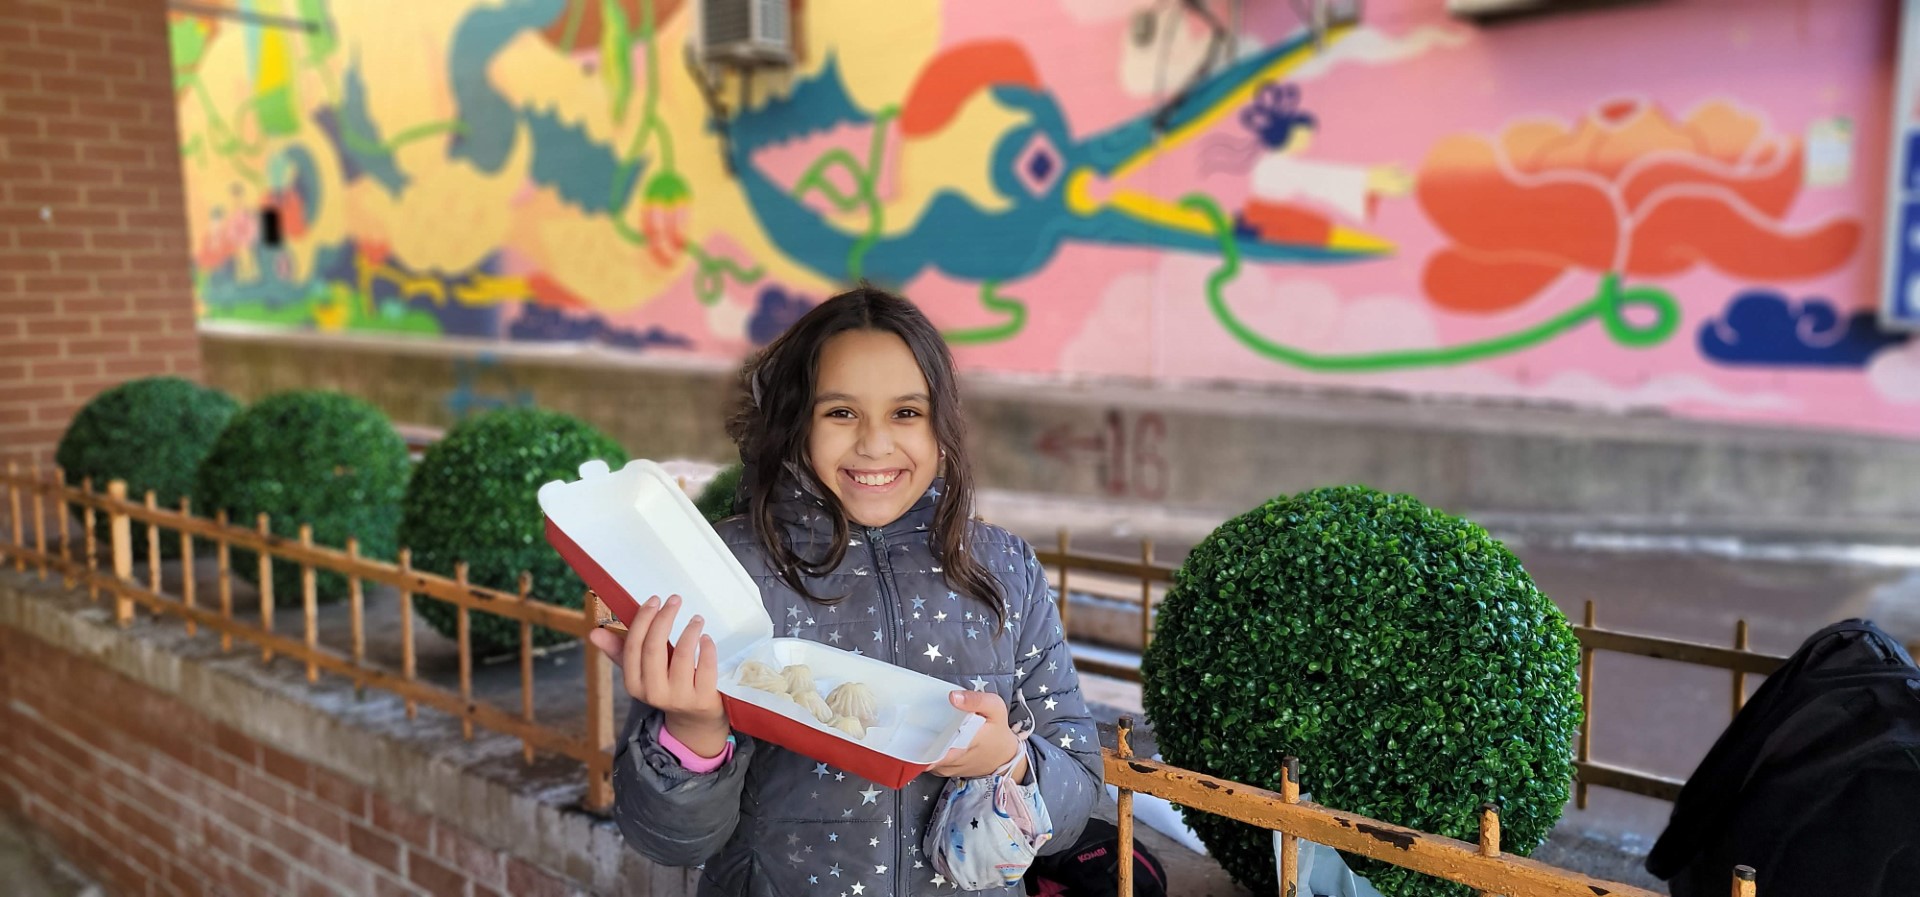 child holding box of dumplings in Chinatown Toronto